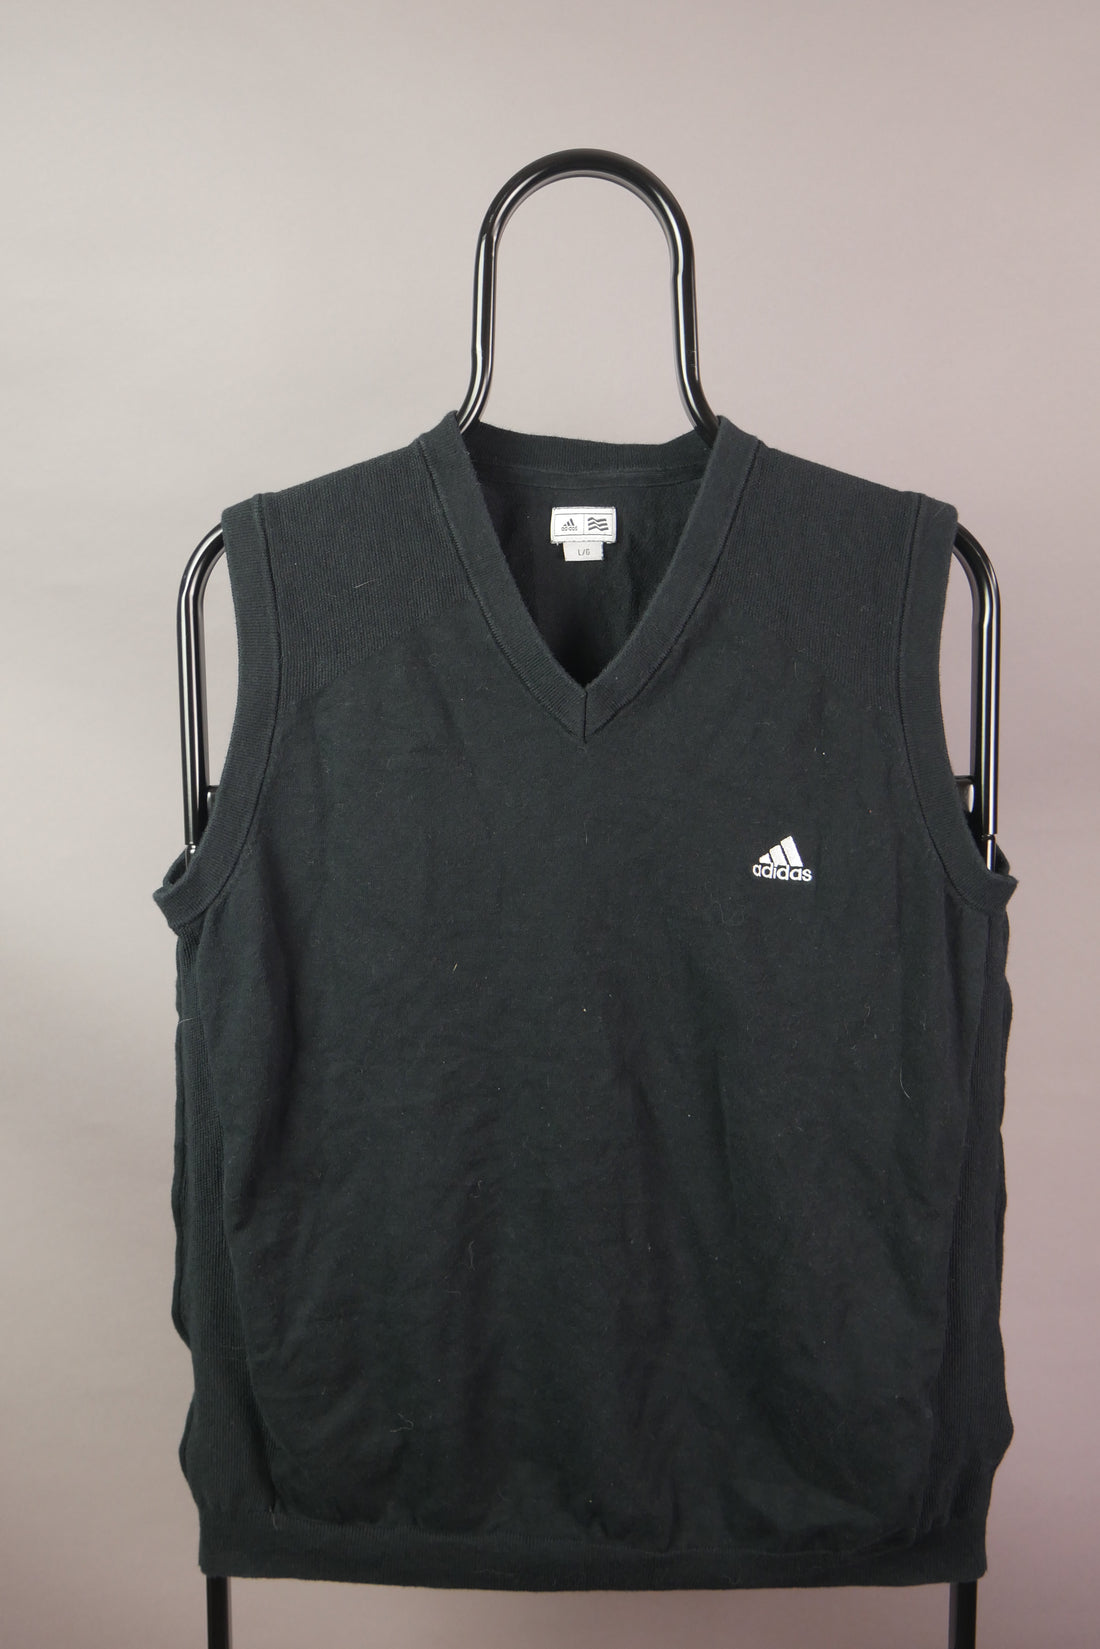 The Adidas Sweater Vest (L)